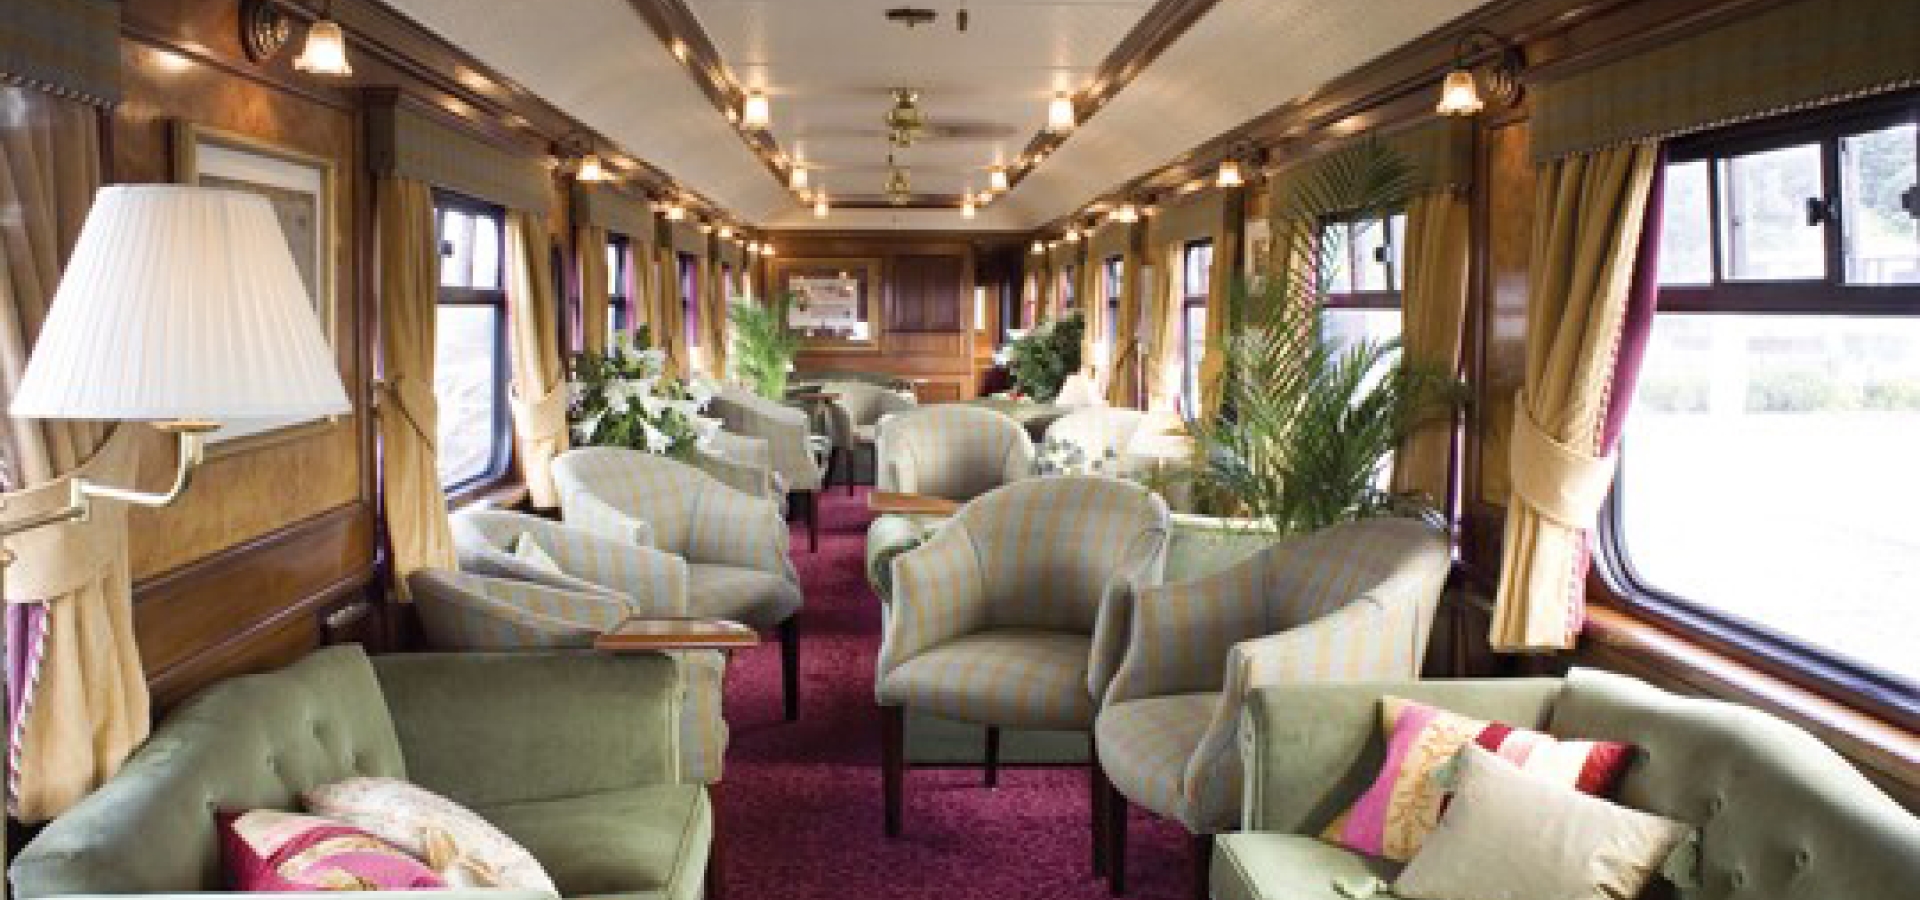 Belmond  Luxury Hotels, Trains, River Cruises and Safaris